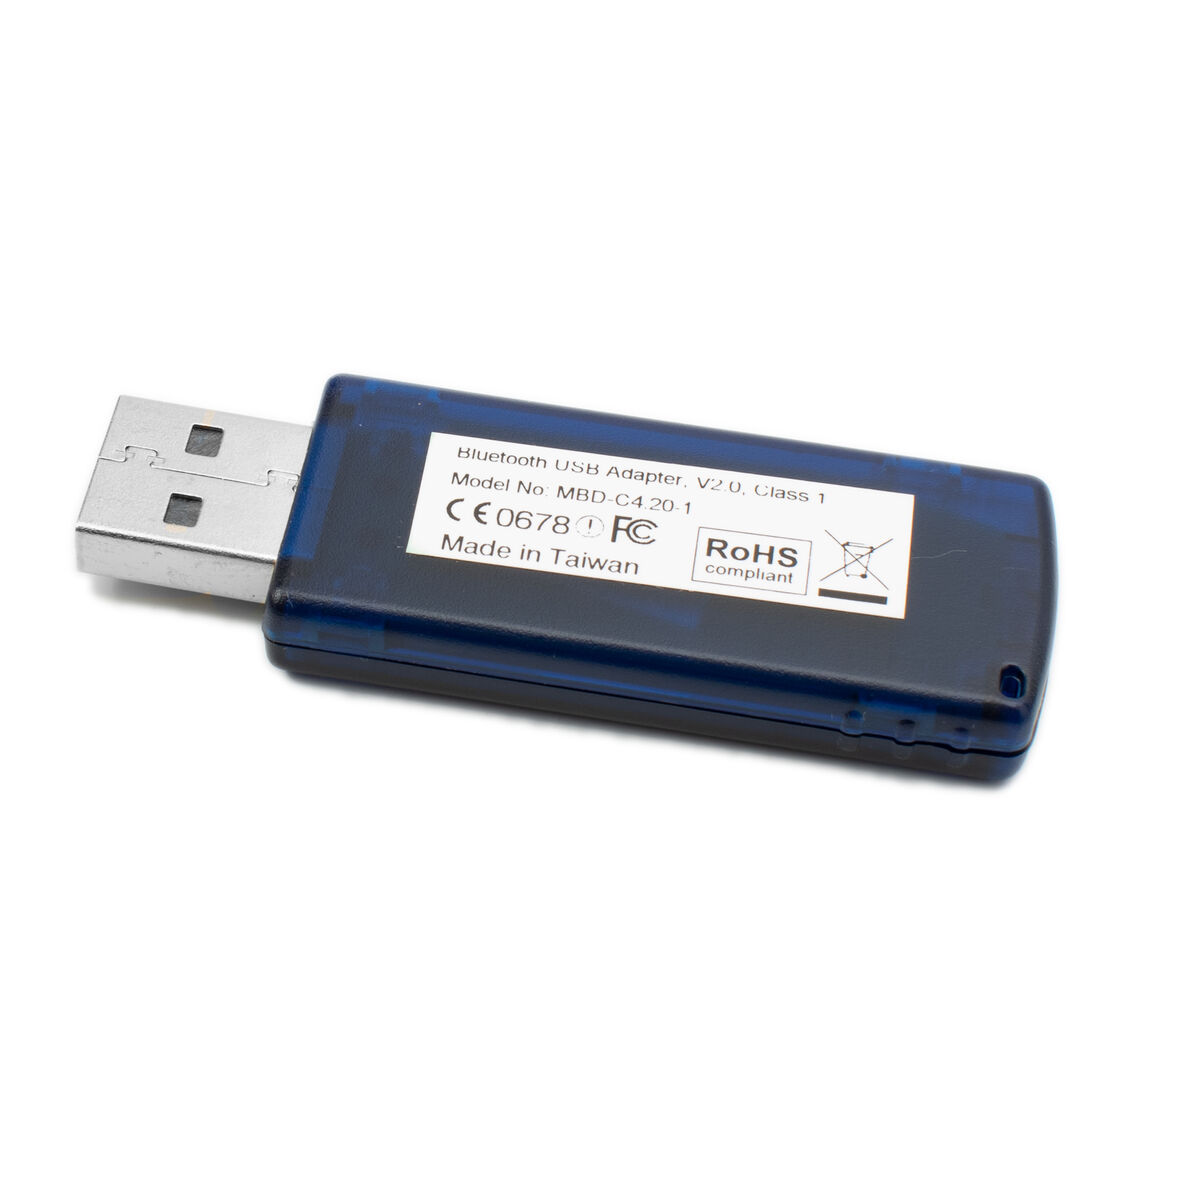 USB stick MBD-C4-20-1